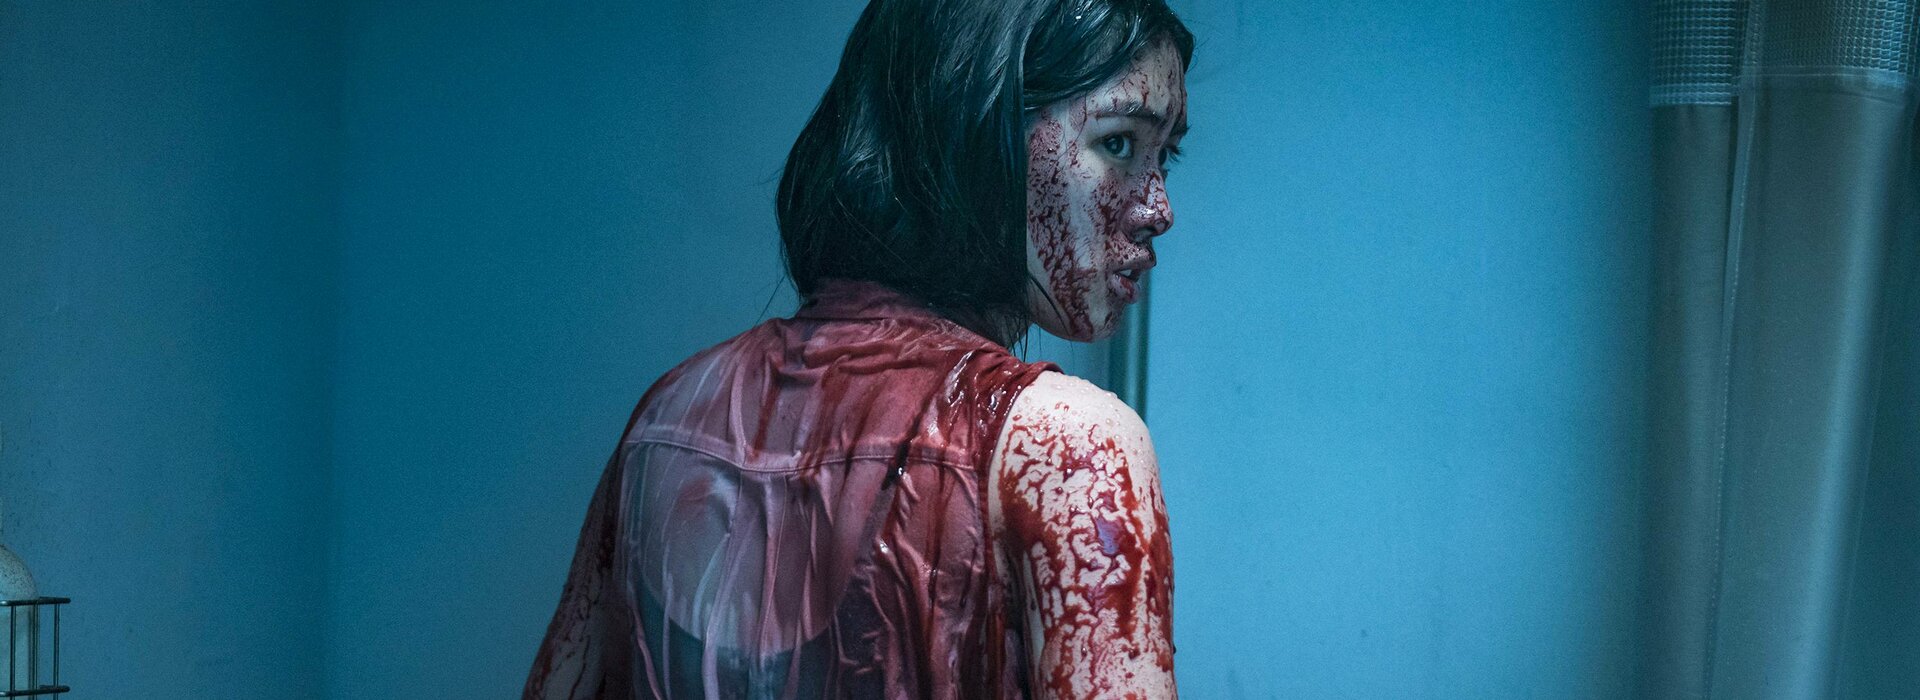 Kino-Tipps: Zombie-Thriller "The Sadness" & Dramedy "Wunderschön" | © Polyfilm